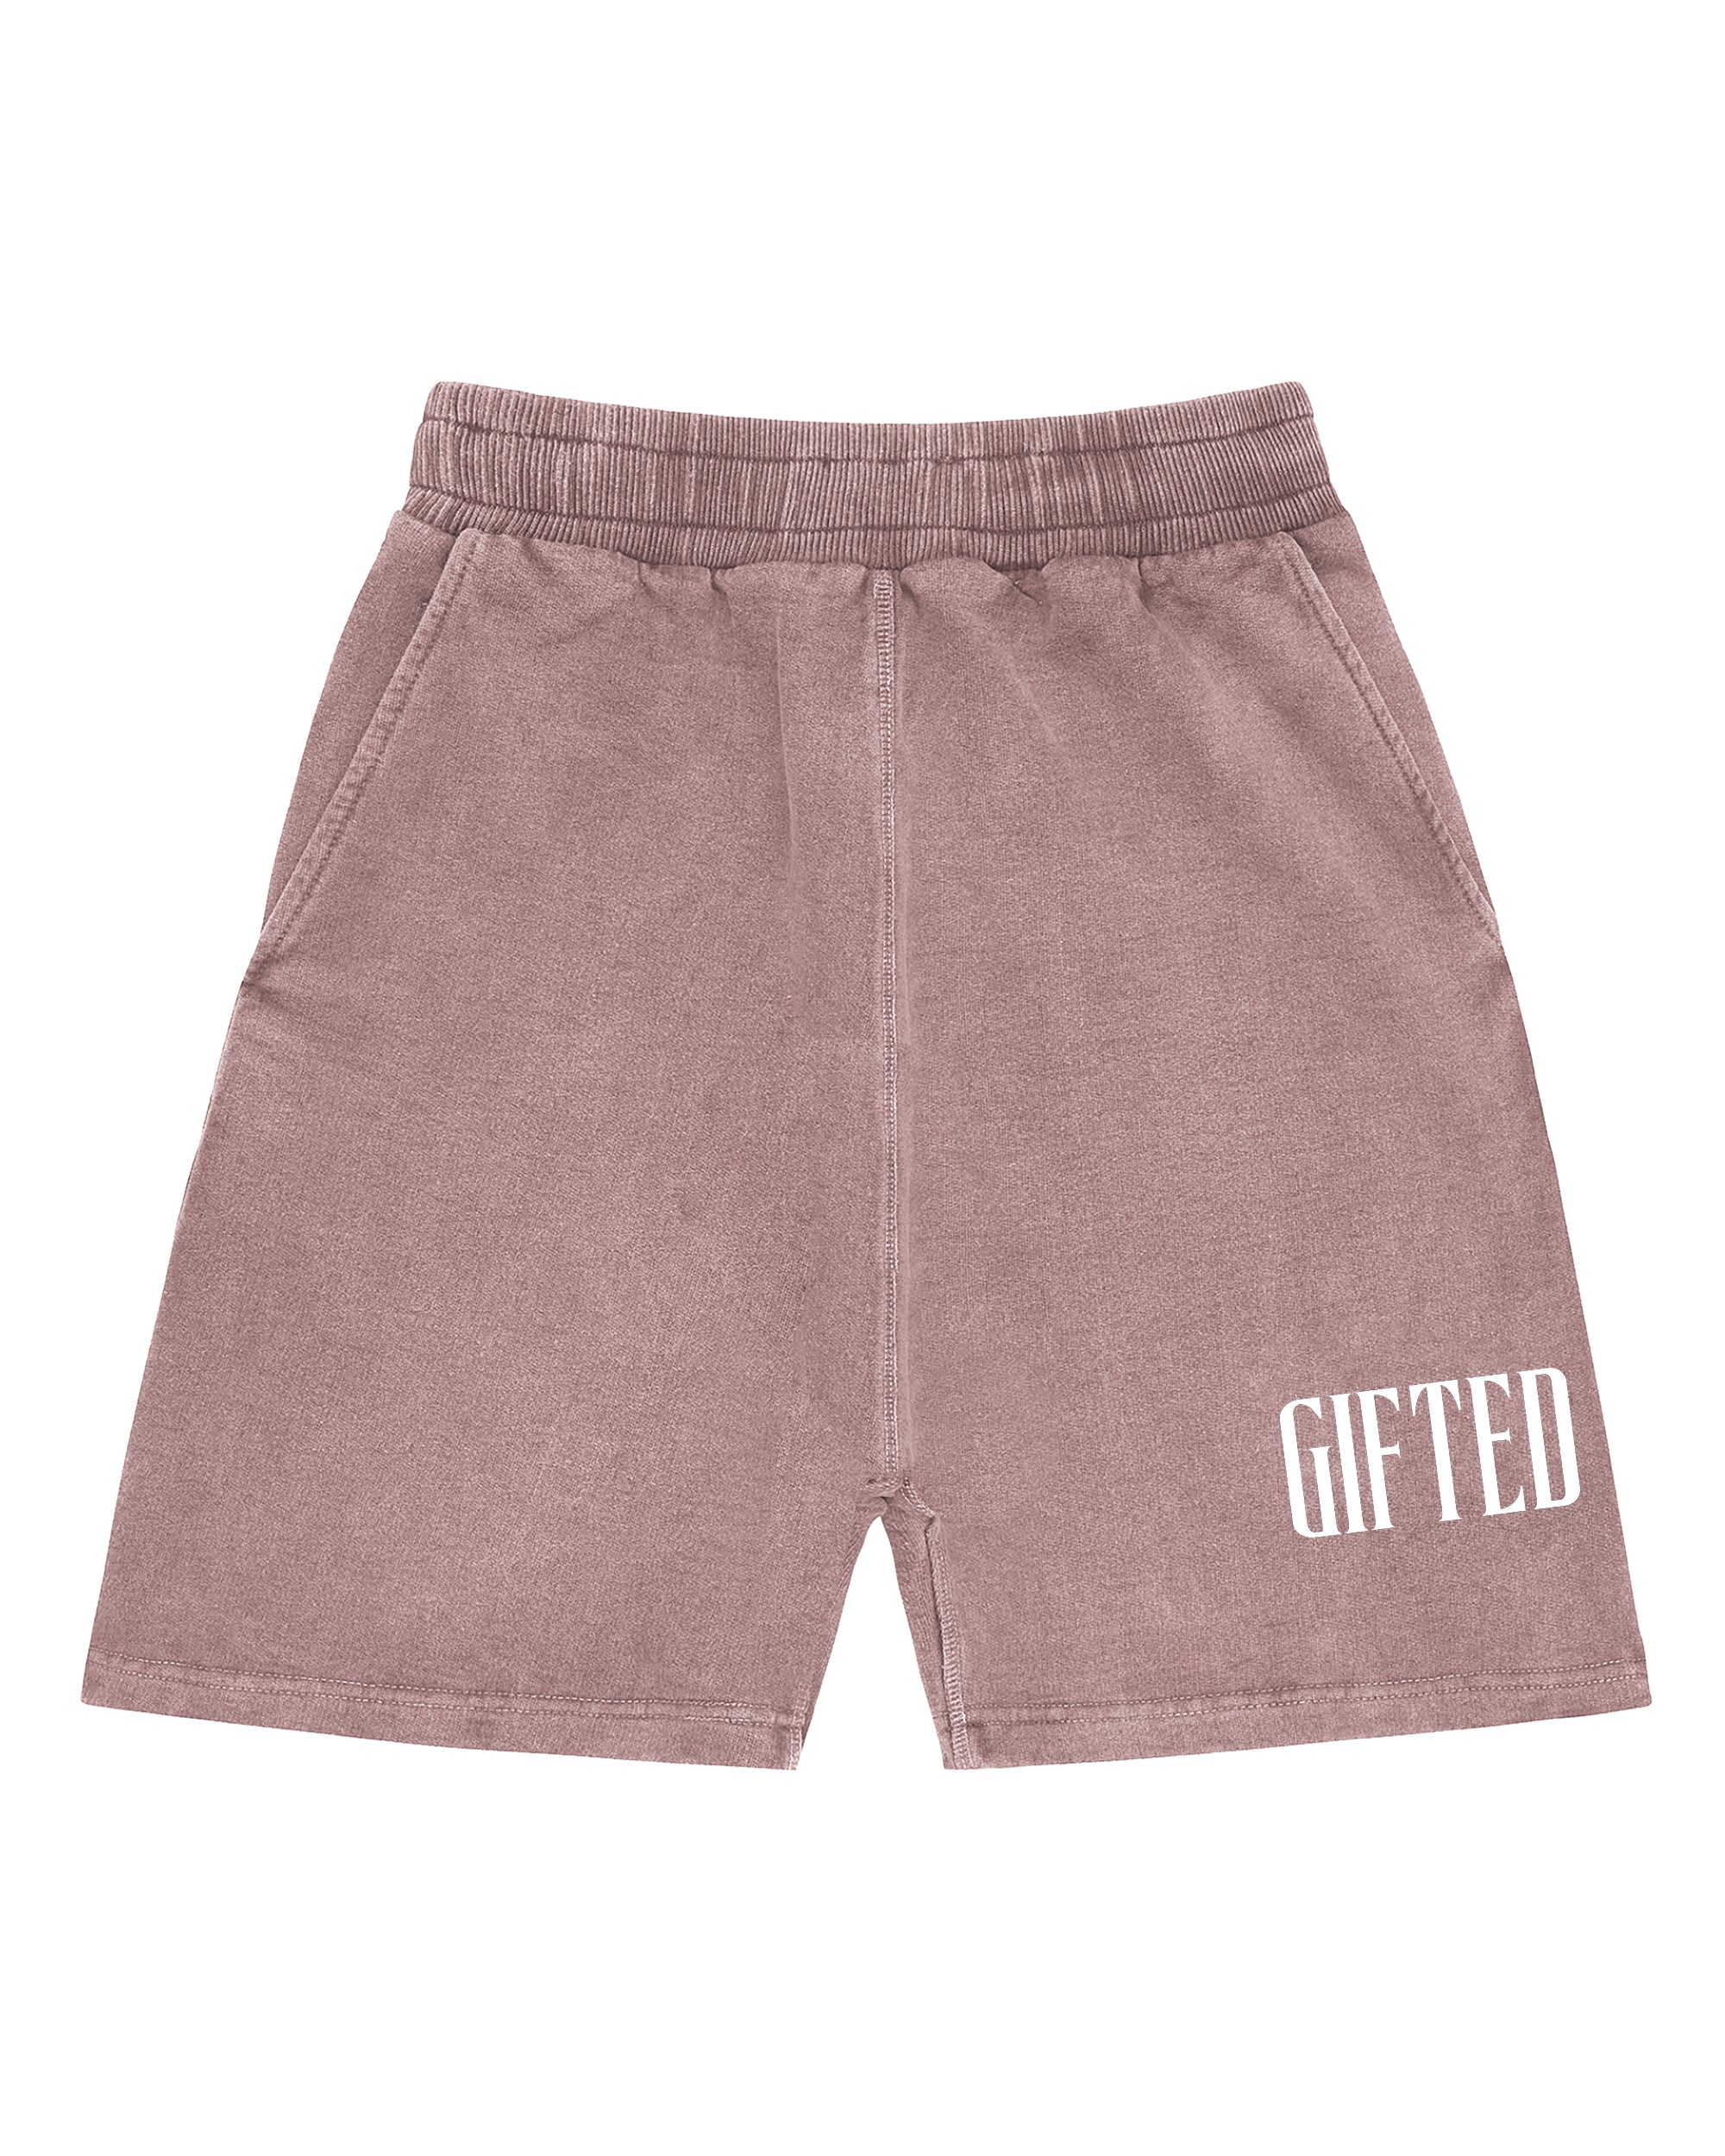 Gifted Shorts - Mocha